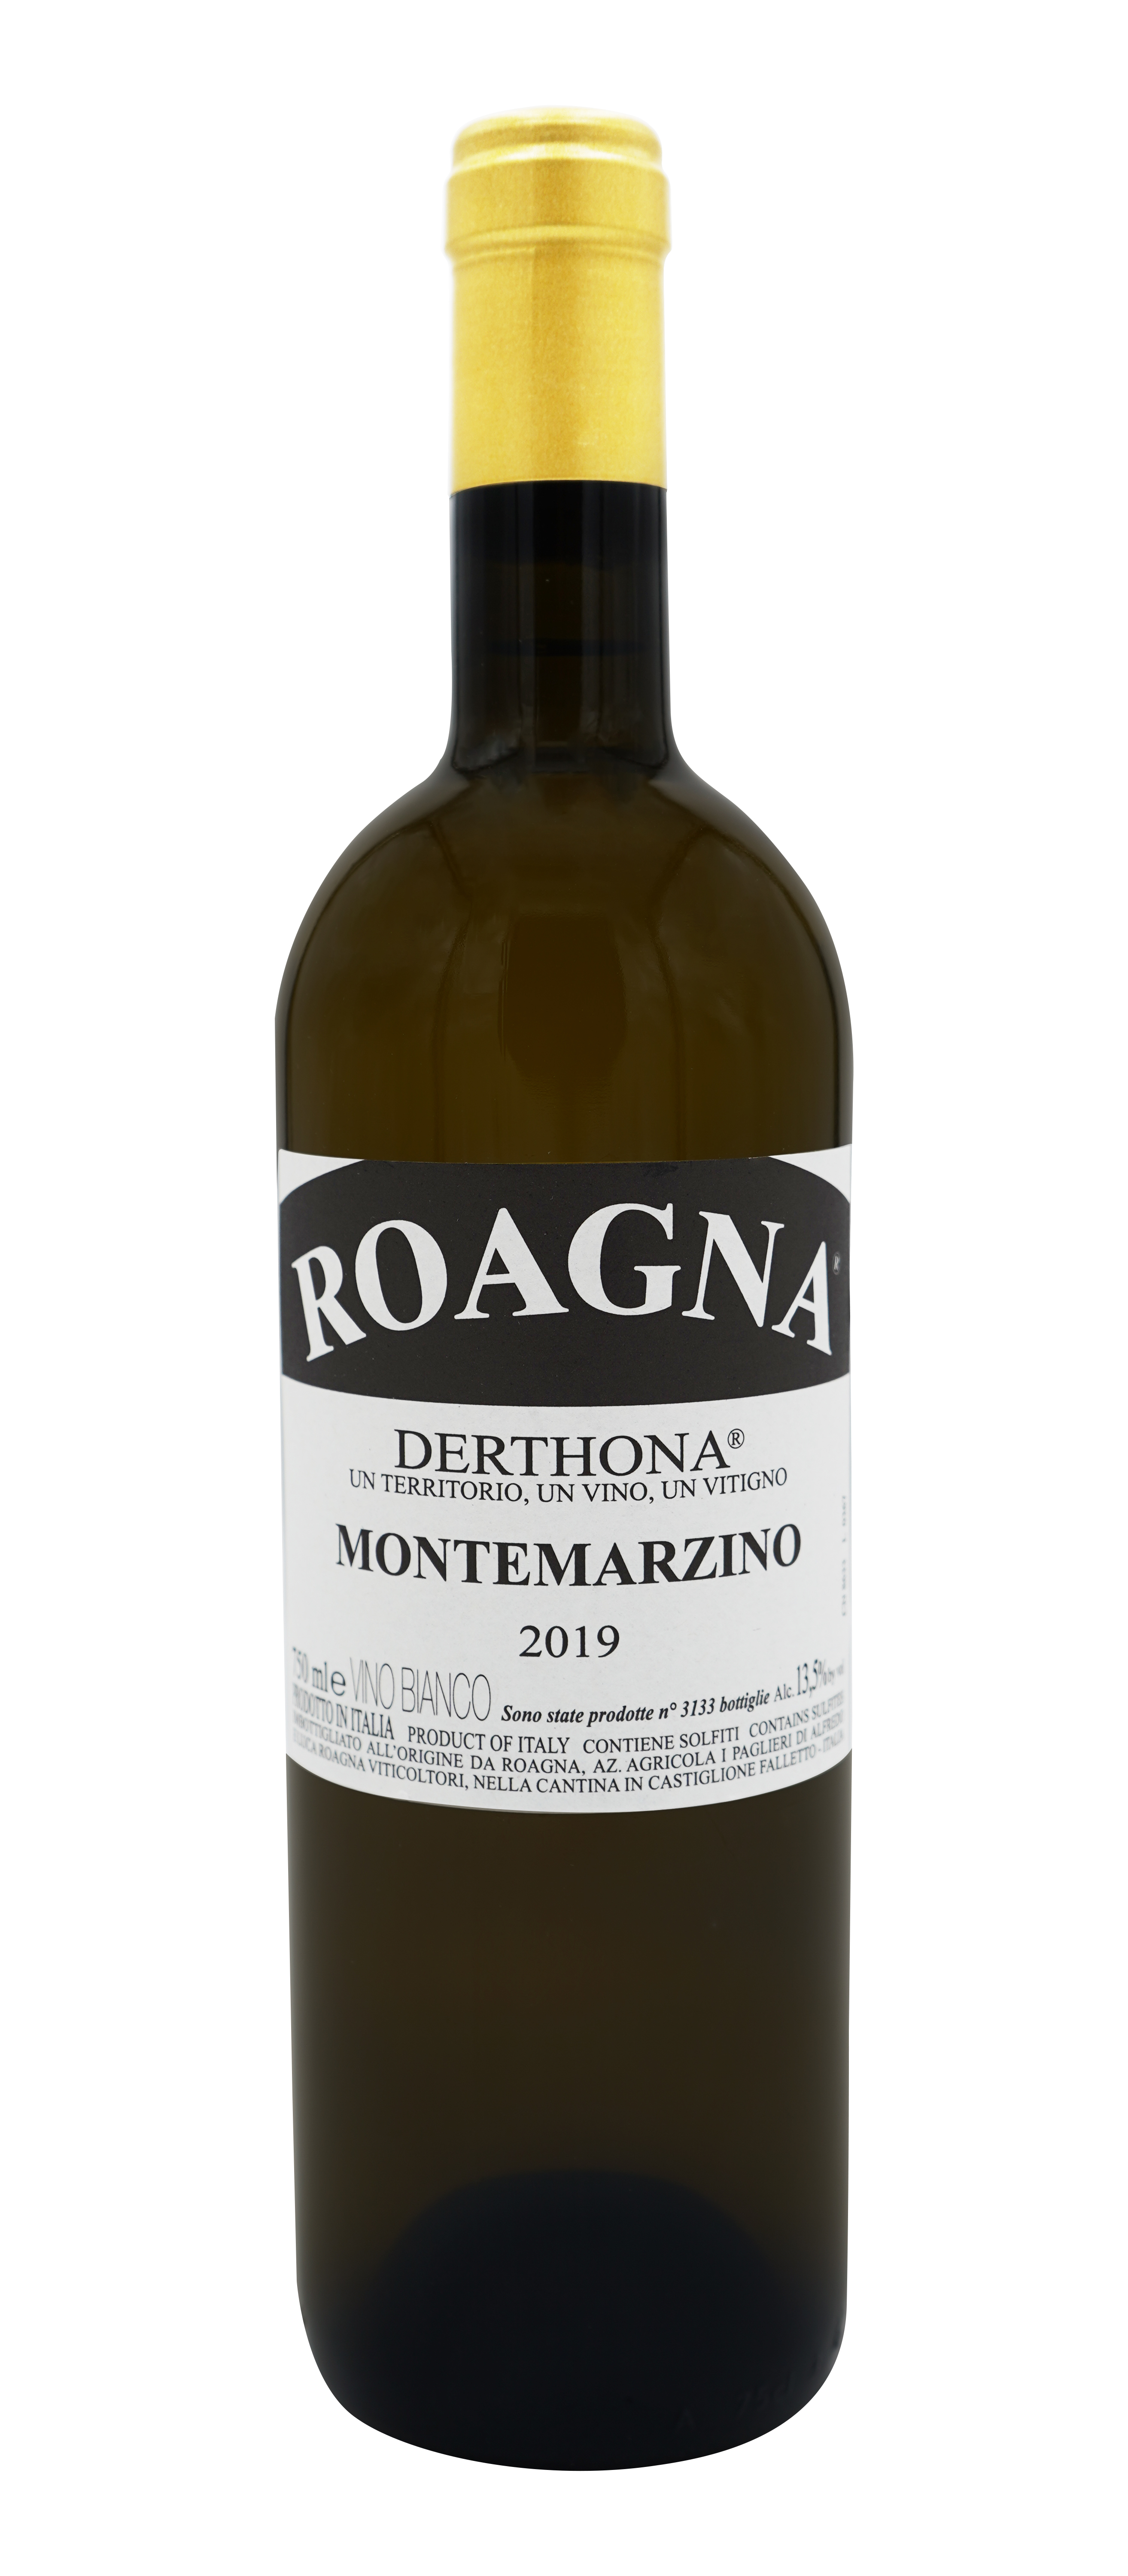 Roagna Montemarzino 2019